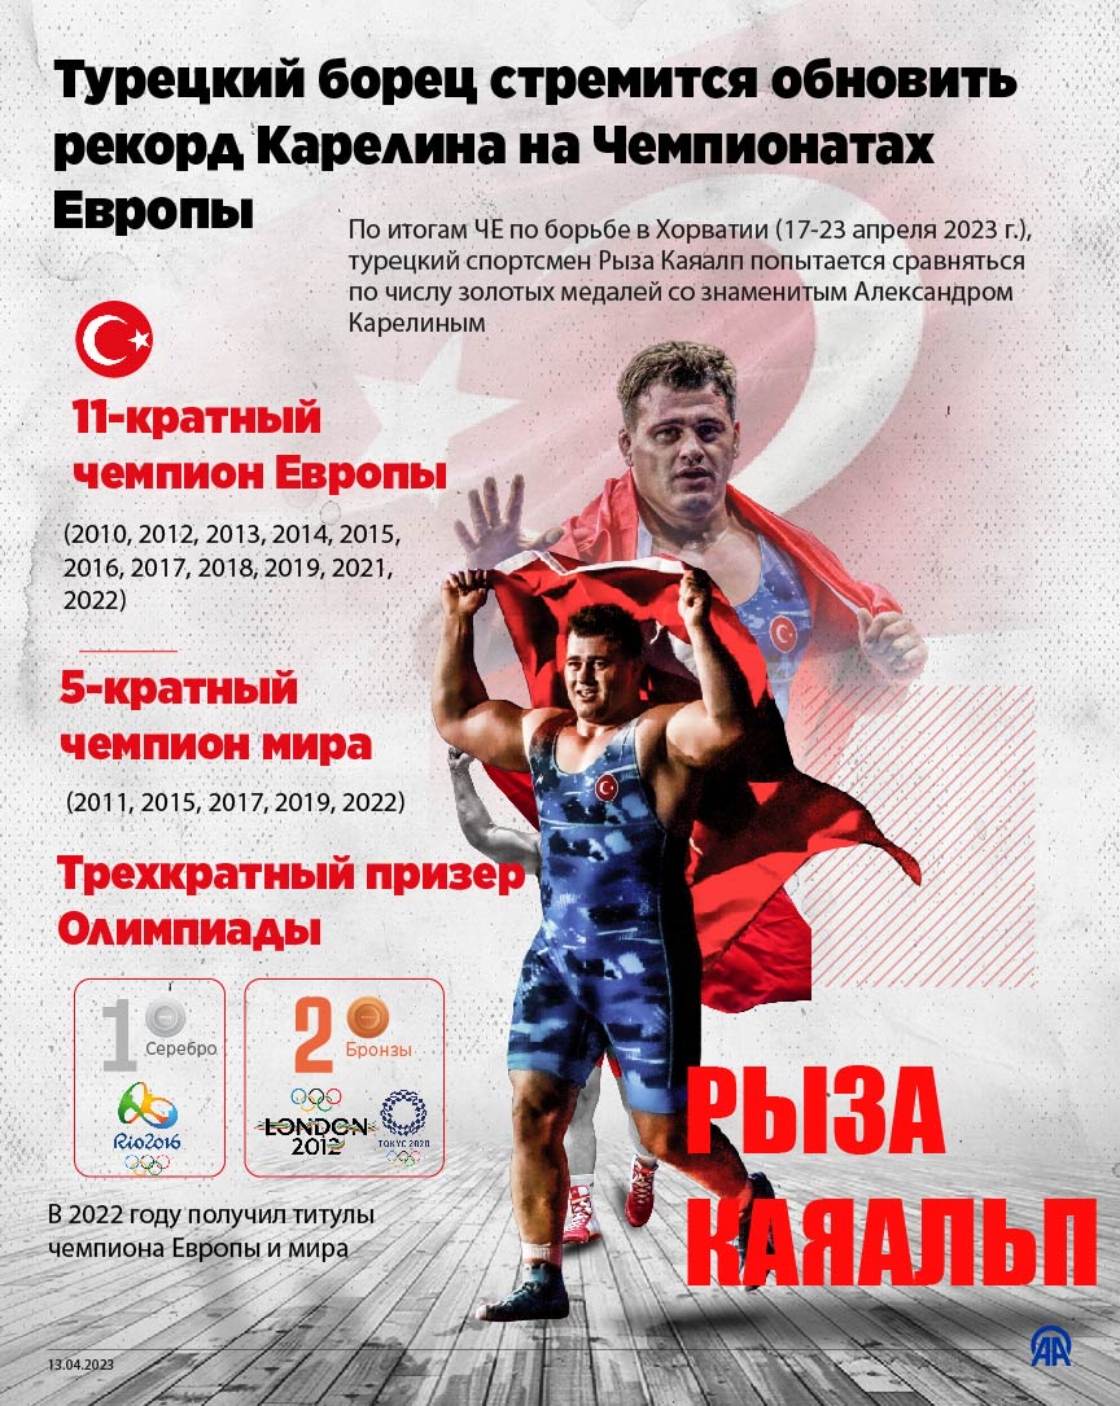 Турецкий борец стремится обновить рекорд Карелина на Чемпионатах Европы